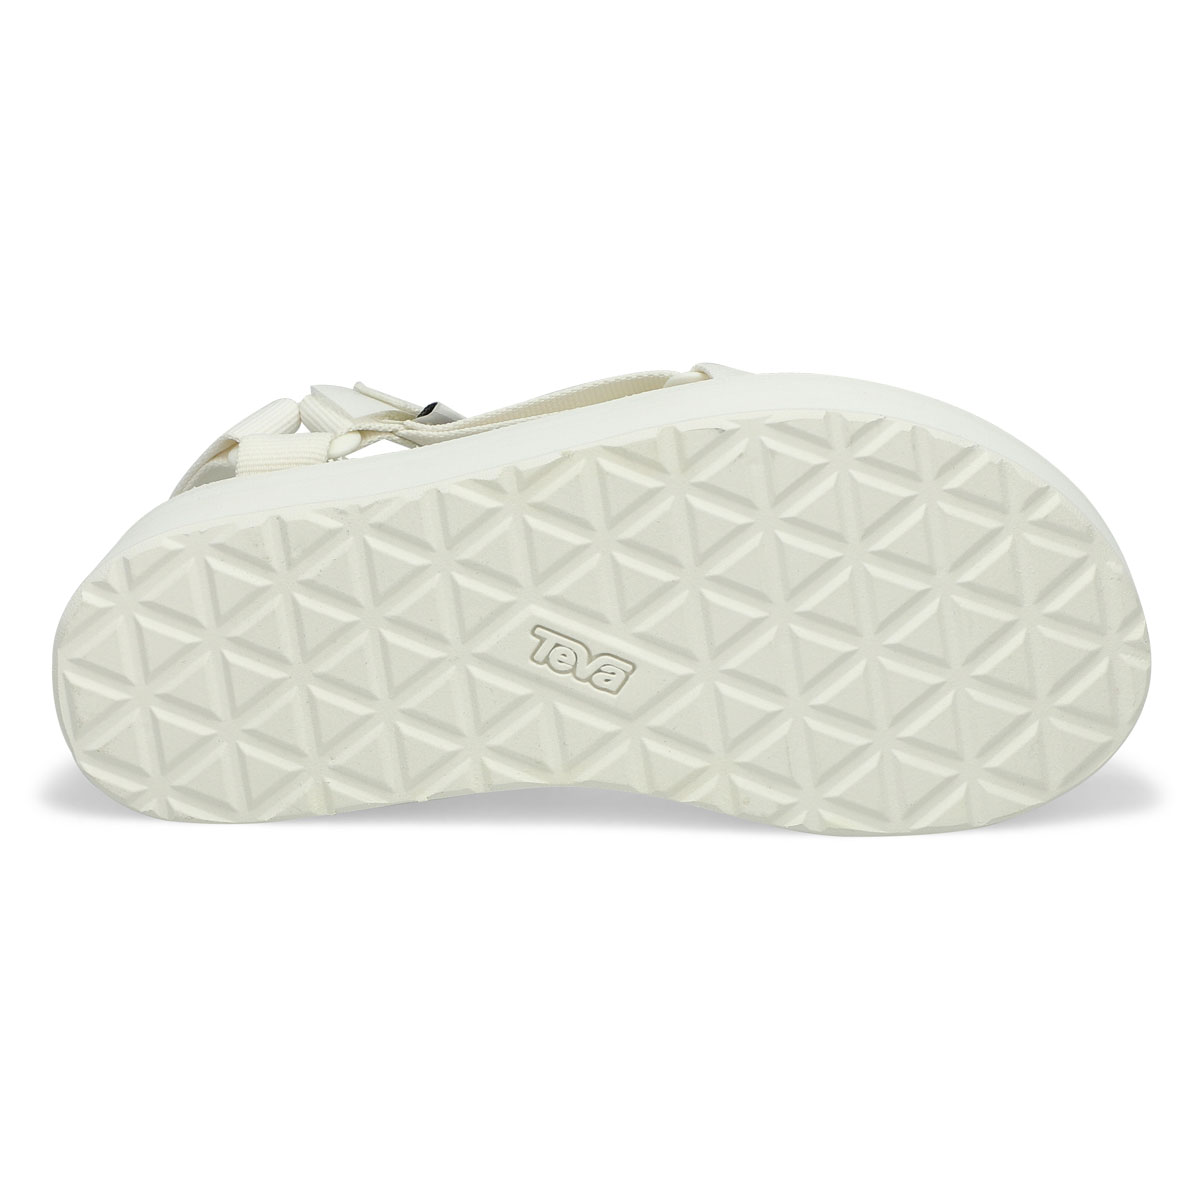 Women's Flatform Universal Sandal - Bright White